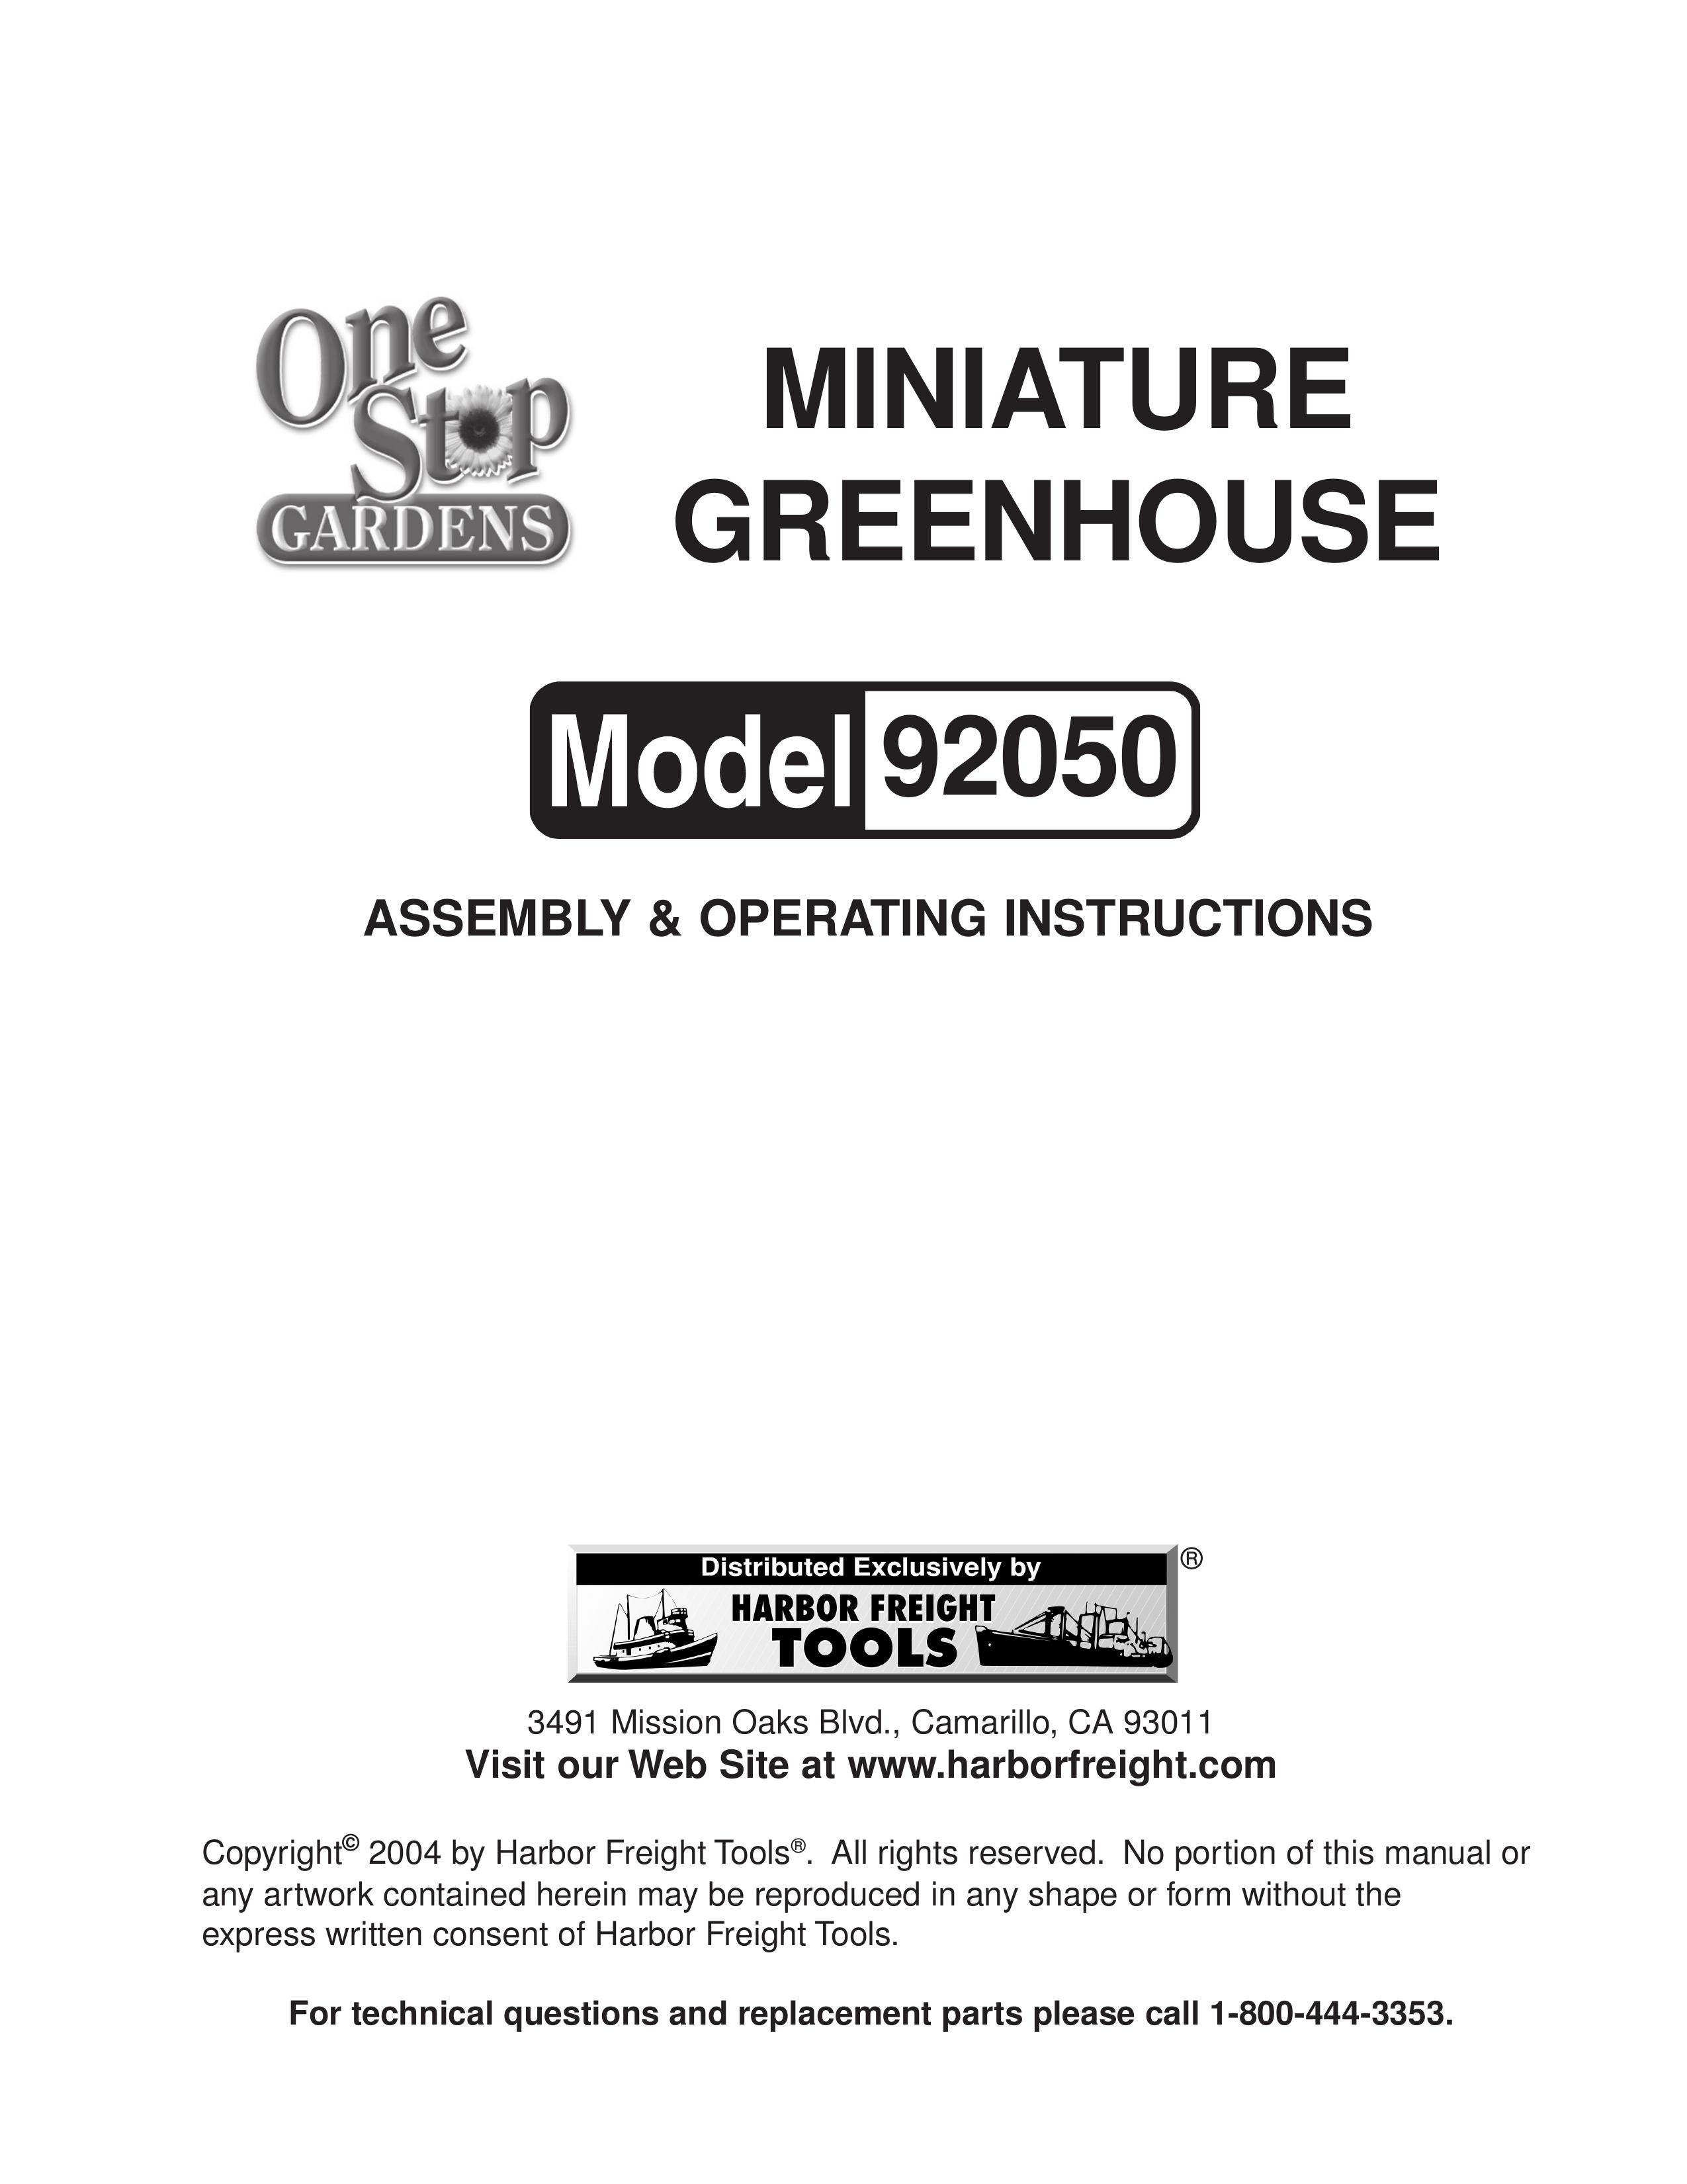 Harbor Freight Tools 92050 Greenhouse Kit User Manual